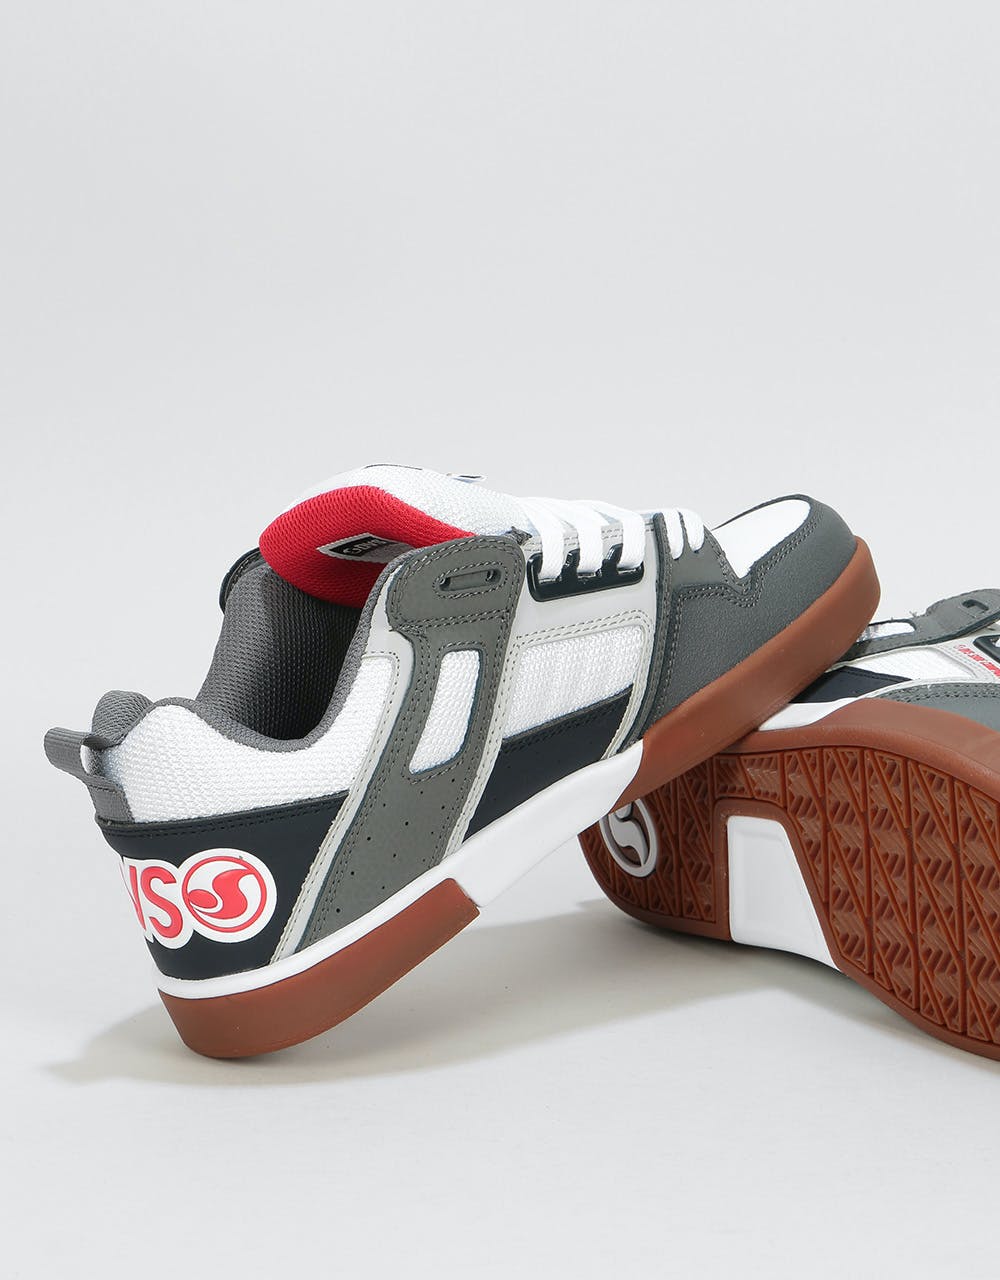 DVS Commanche 2.0 Skate Shoes - White/Grey/Navy/Nubuck